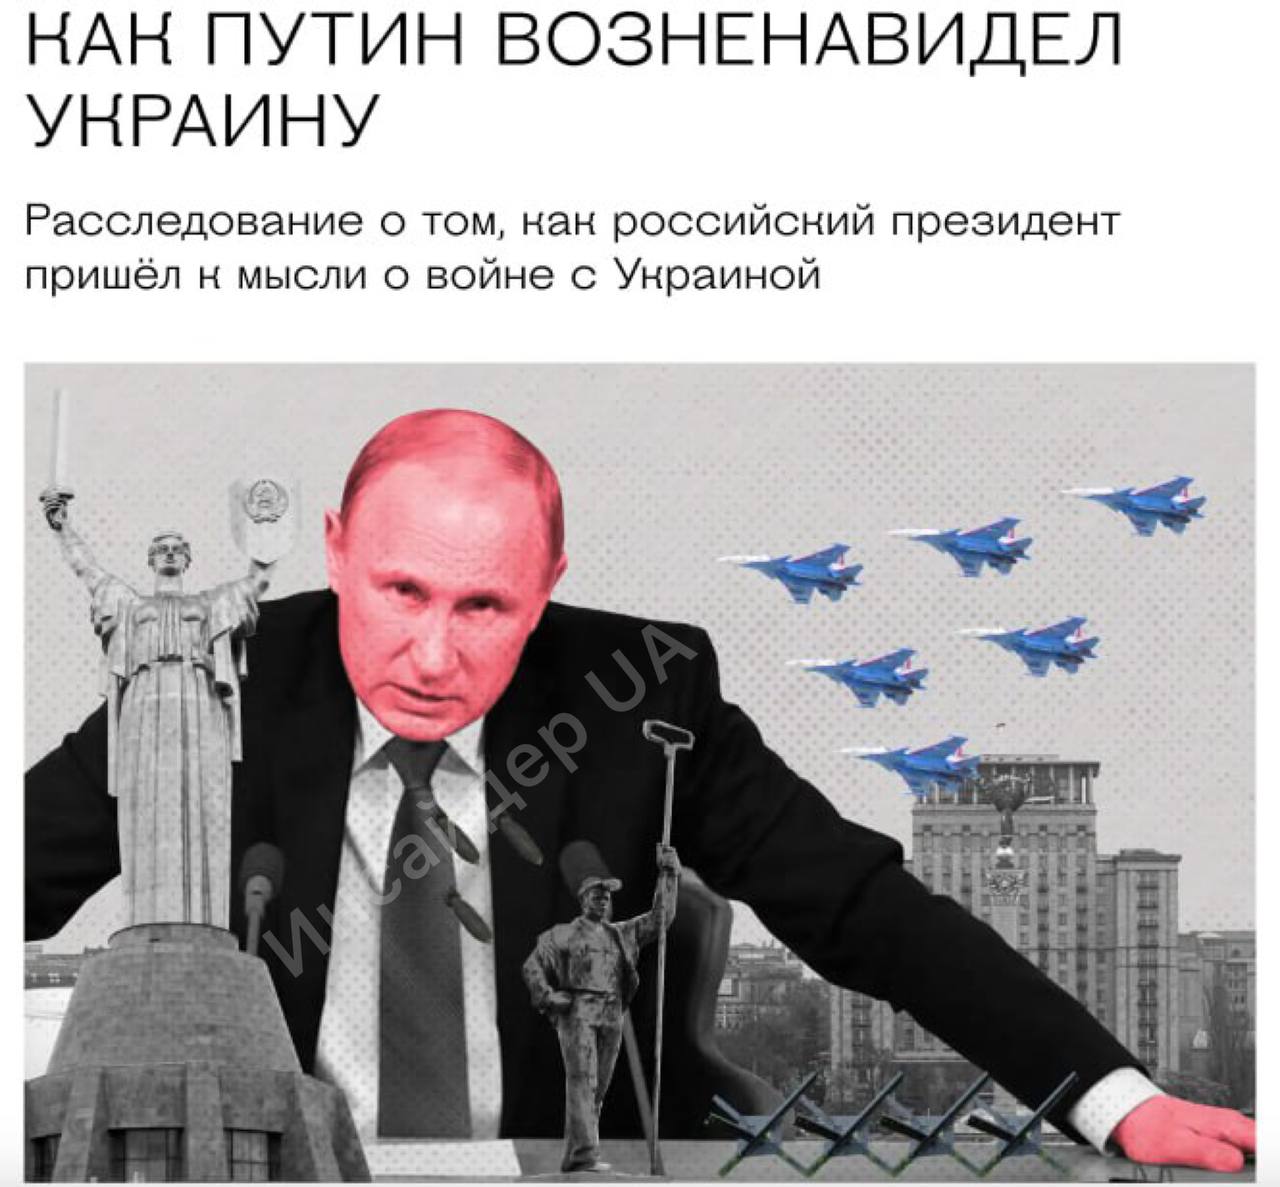 Putin agry